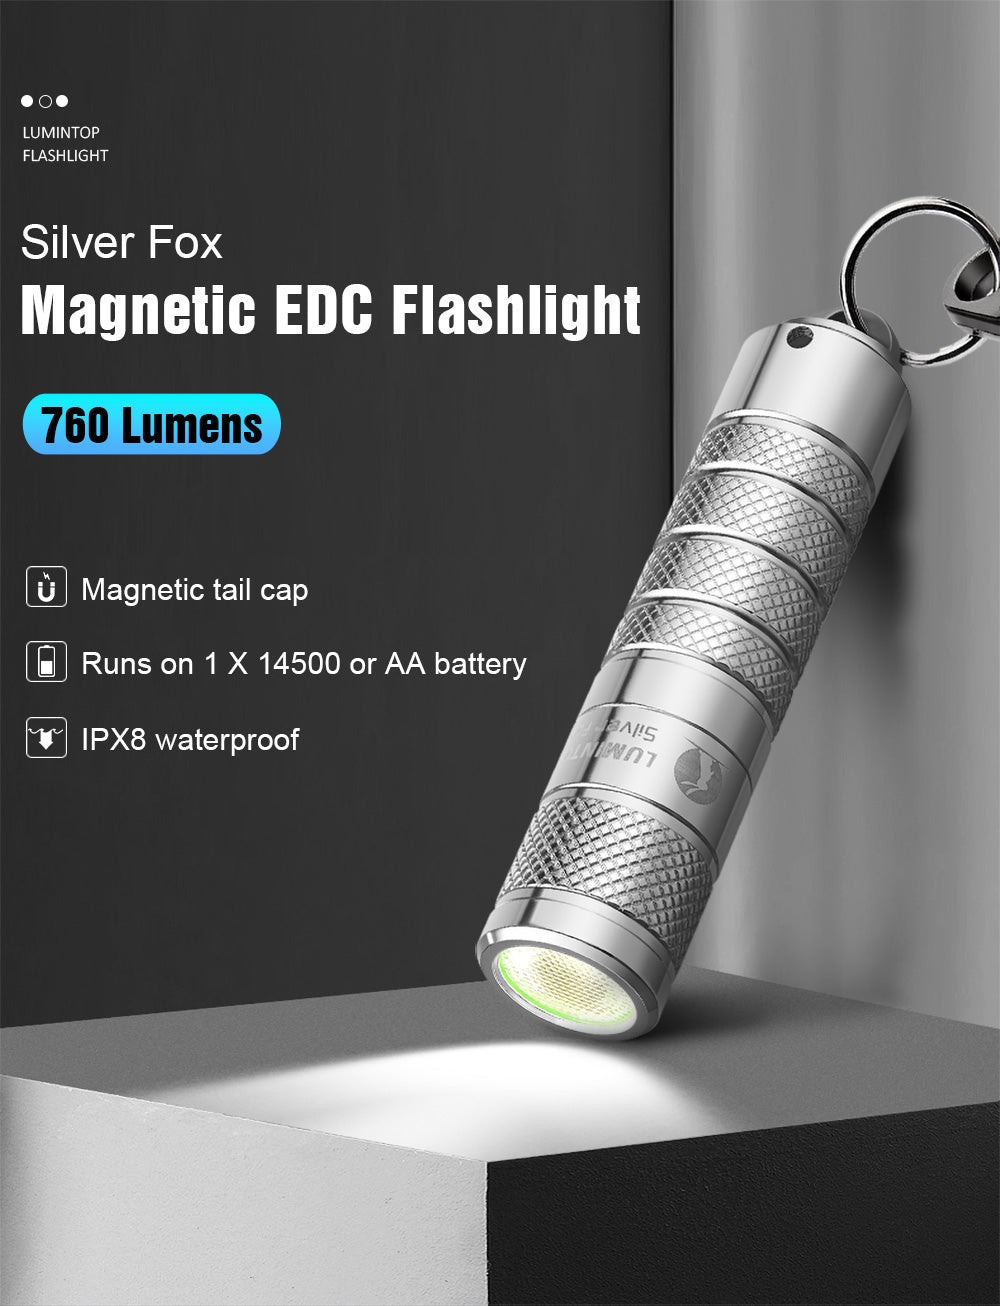 Lumintop Silver Fox 760 Lumens Magnetic EDC Flashlight Keychain Flashlight